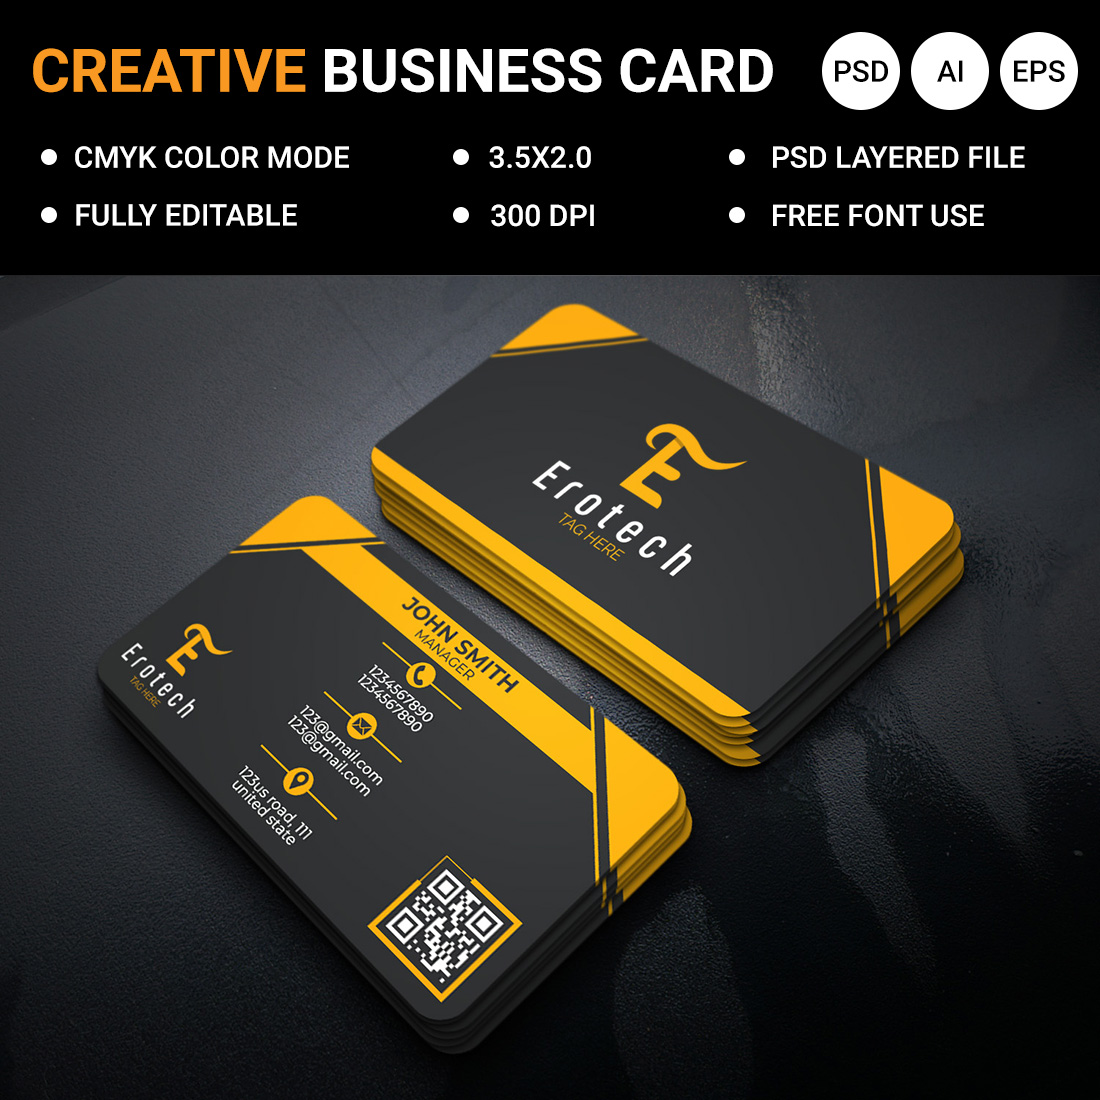 Professional and creative business card design template psd file, ai file, eps file cover image.